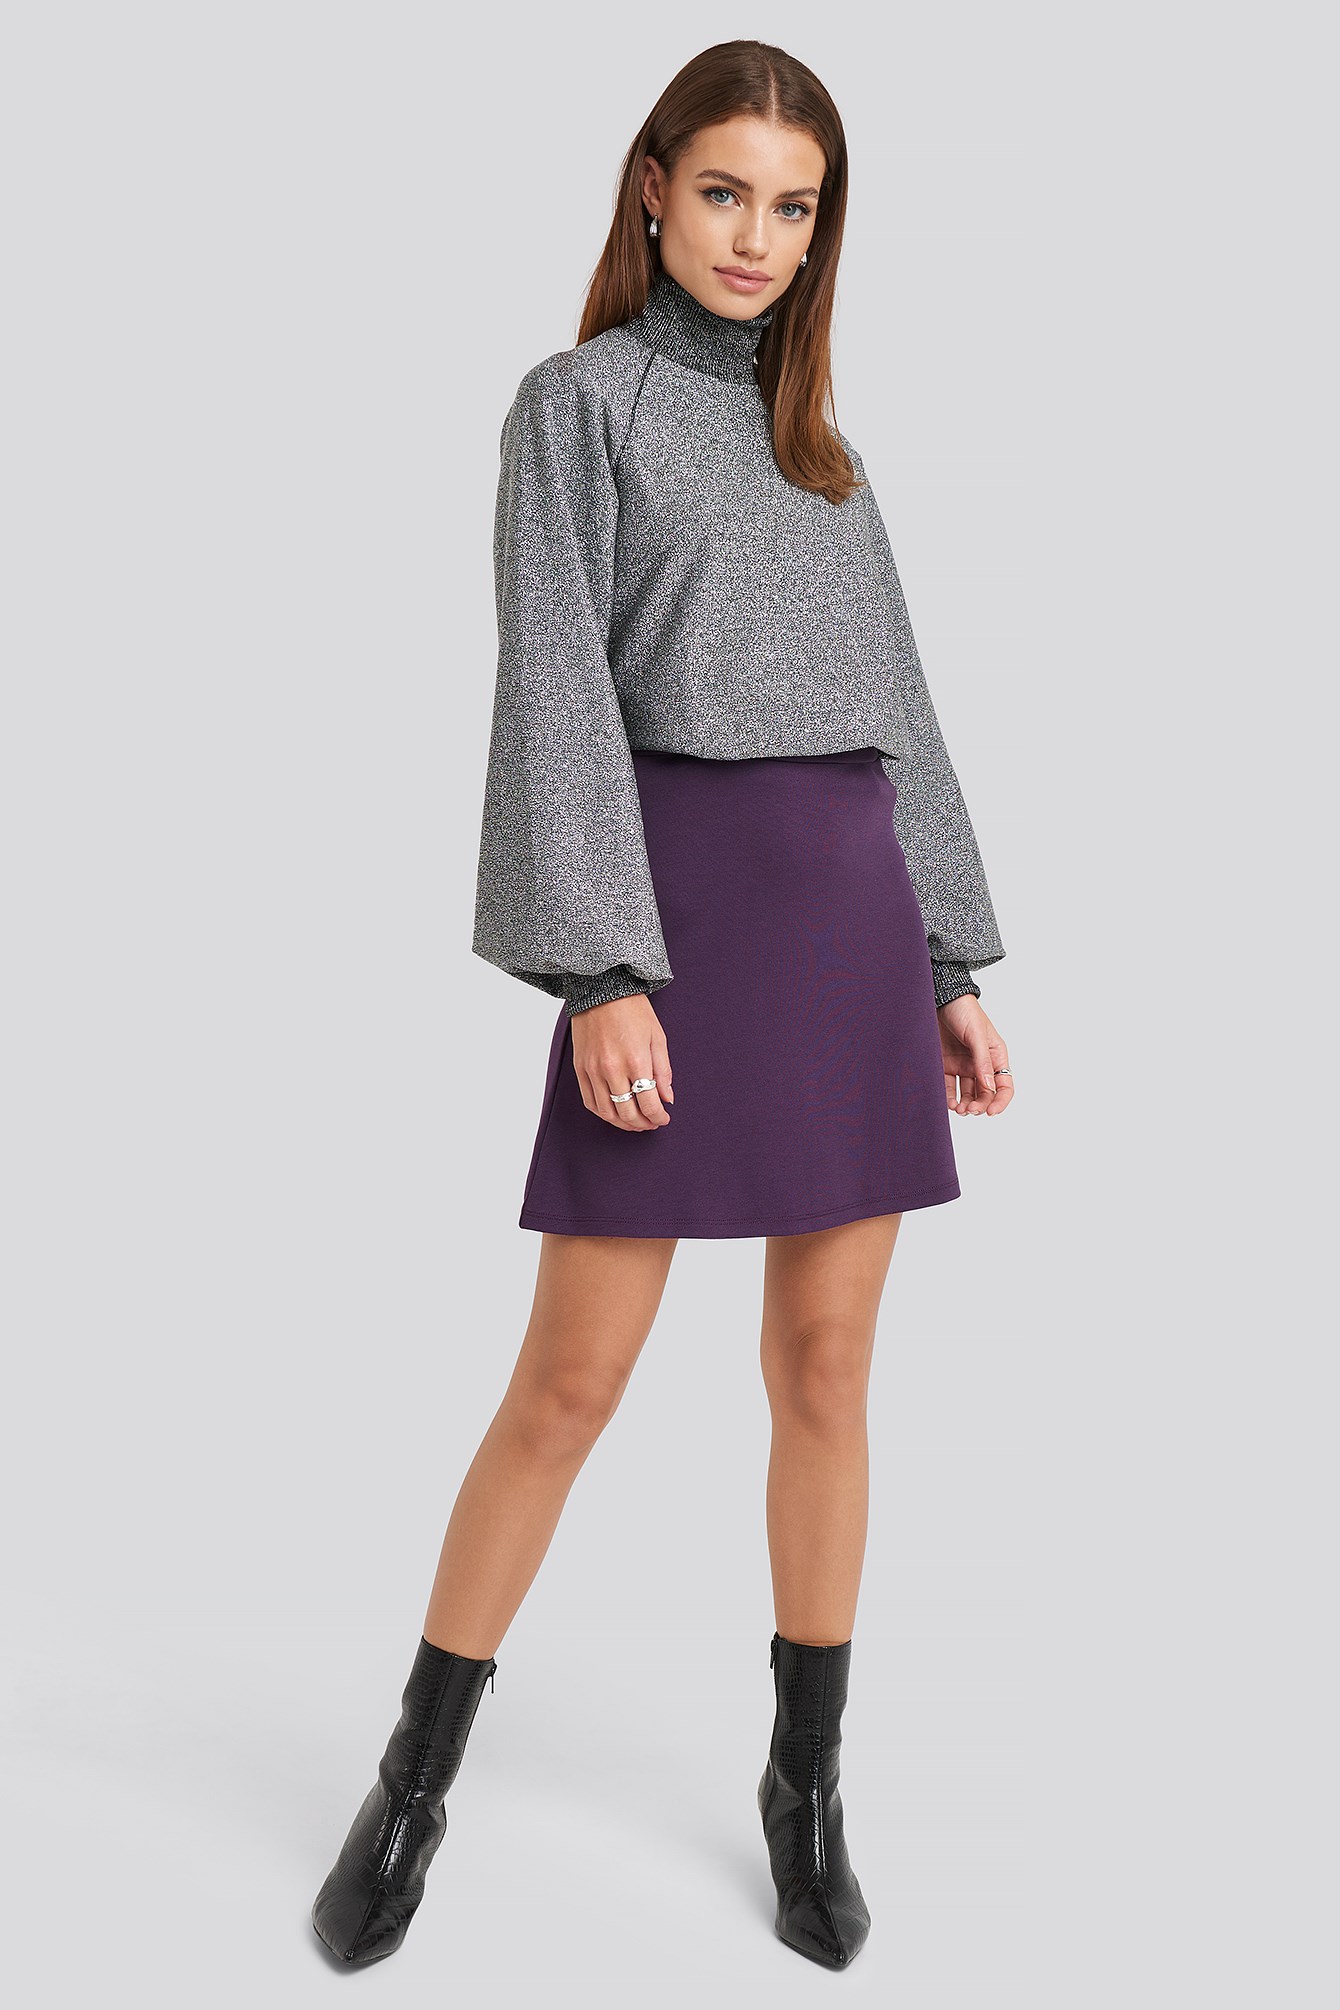 High Waist A-Line Skirt Purple Outfit.